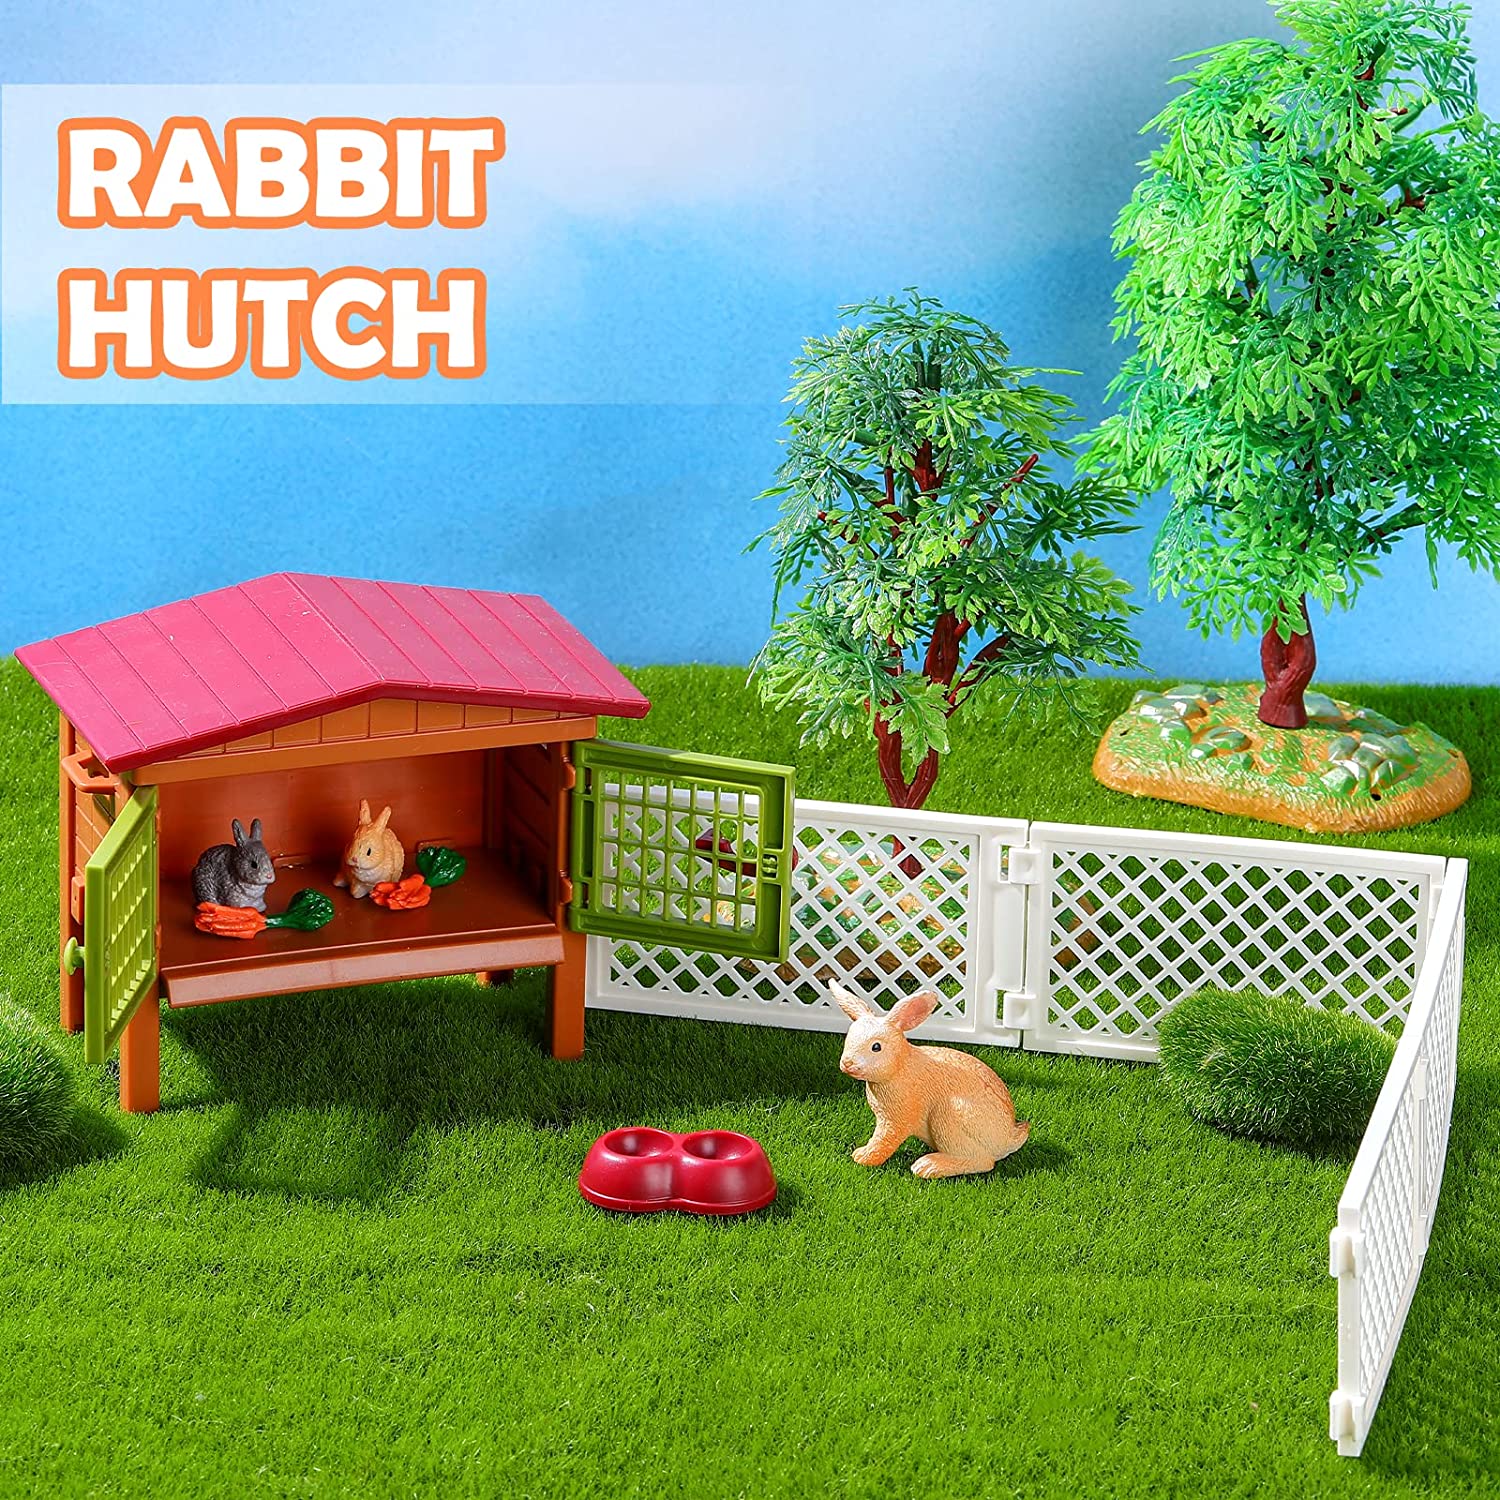 Toy Animal Figures Barnyard Carrot Bunny Hutch Farmhouse Country Toys